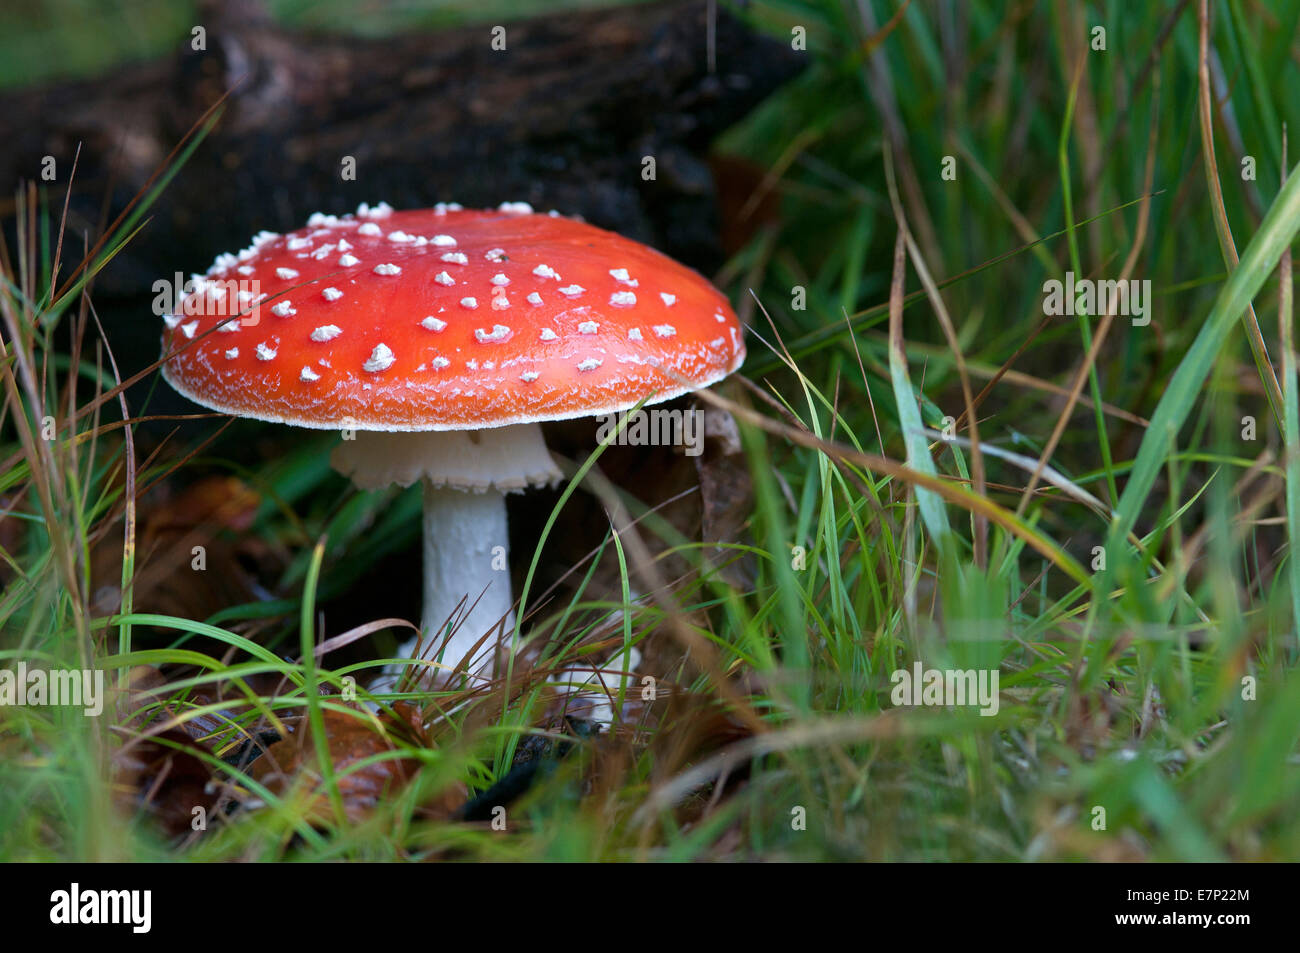 Fly amanita, Fly agaric, mushroom, poisonous, champignon, red, Stock Photo